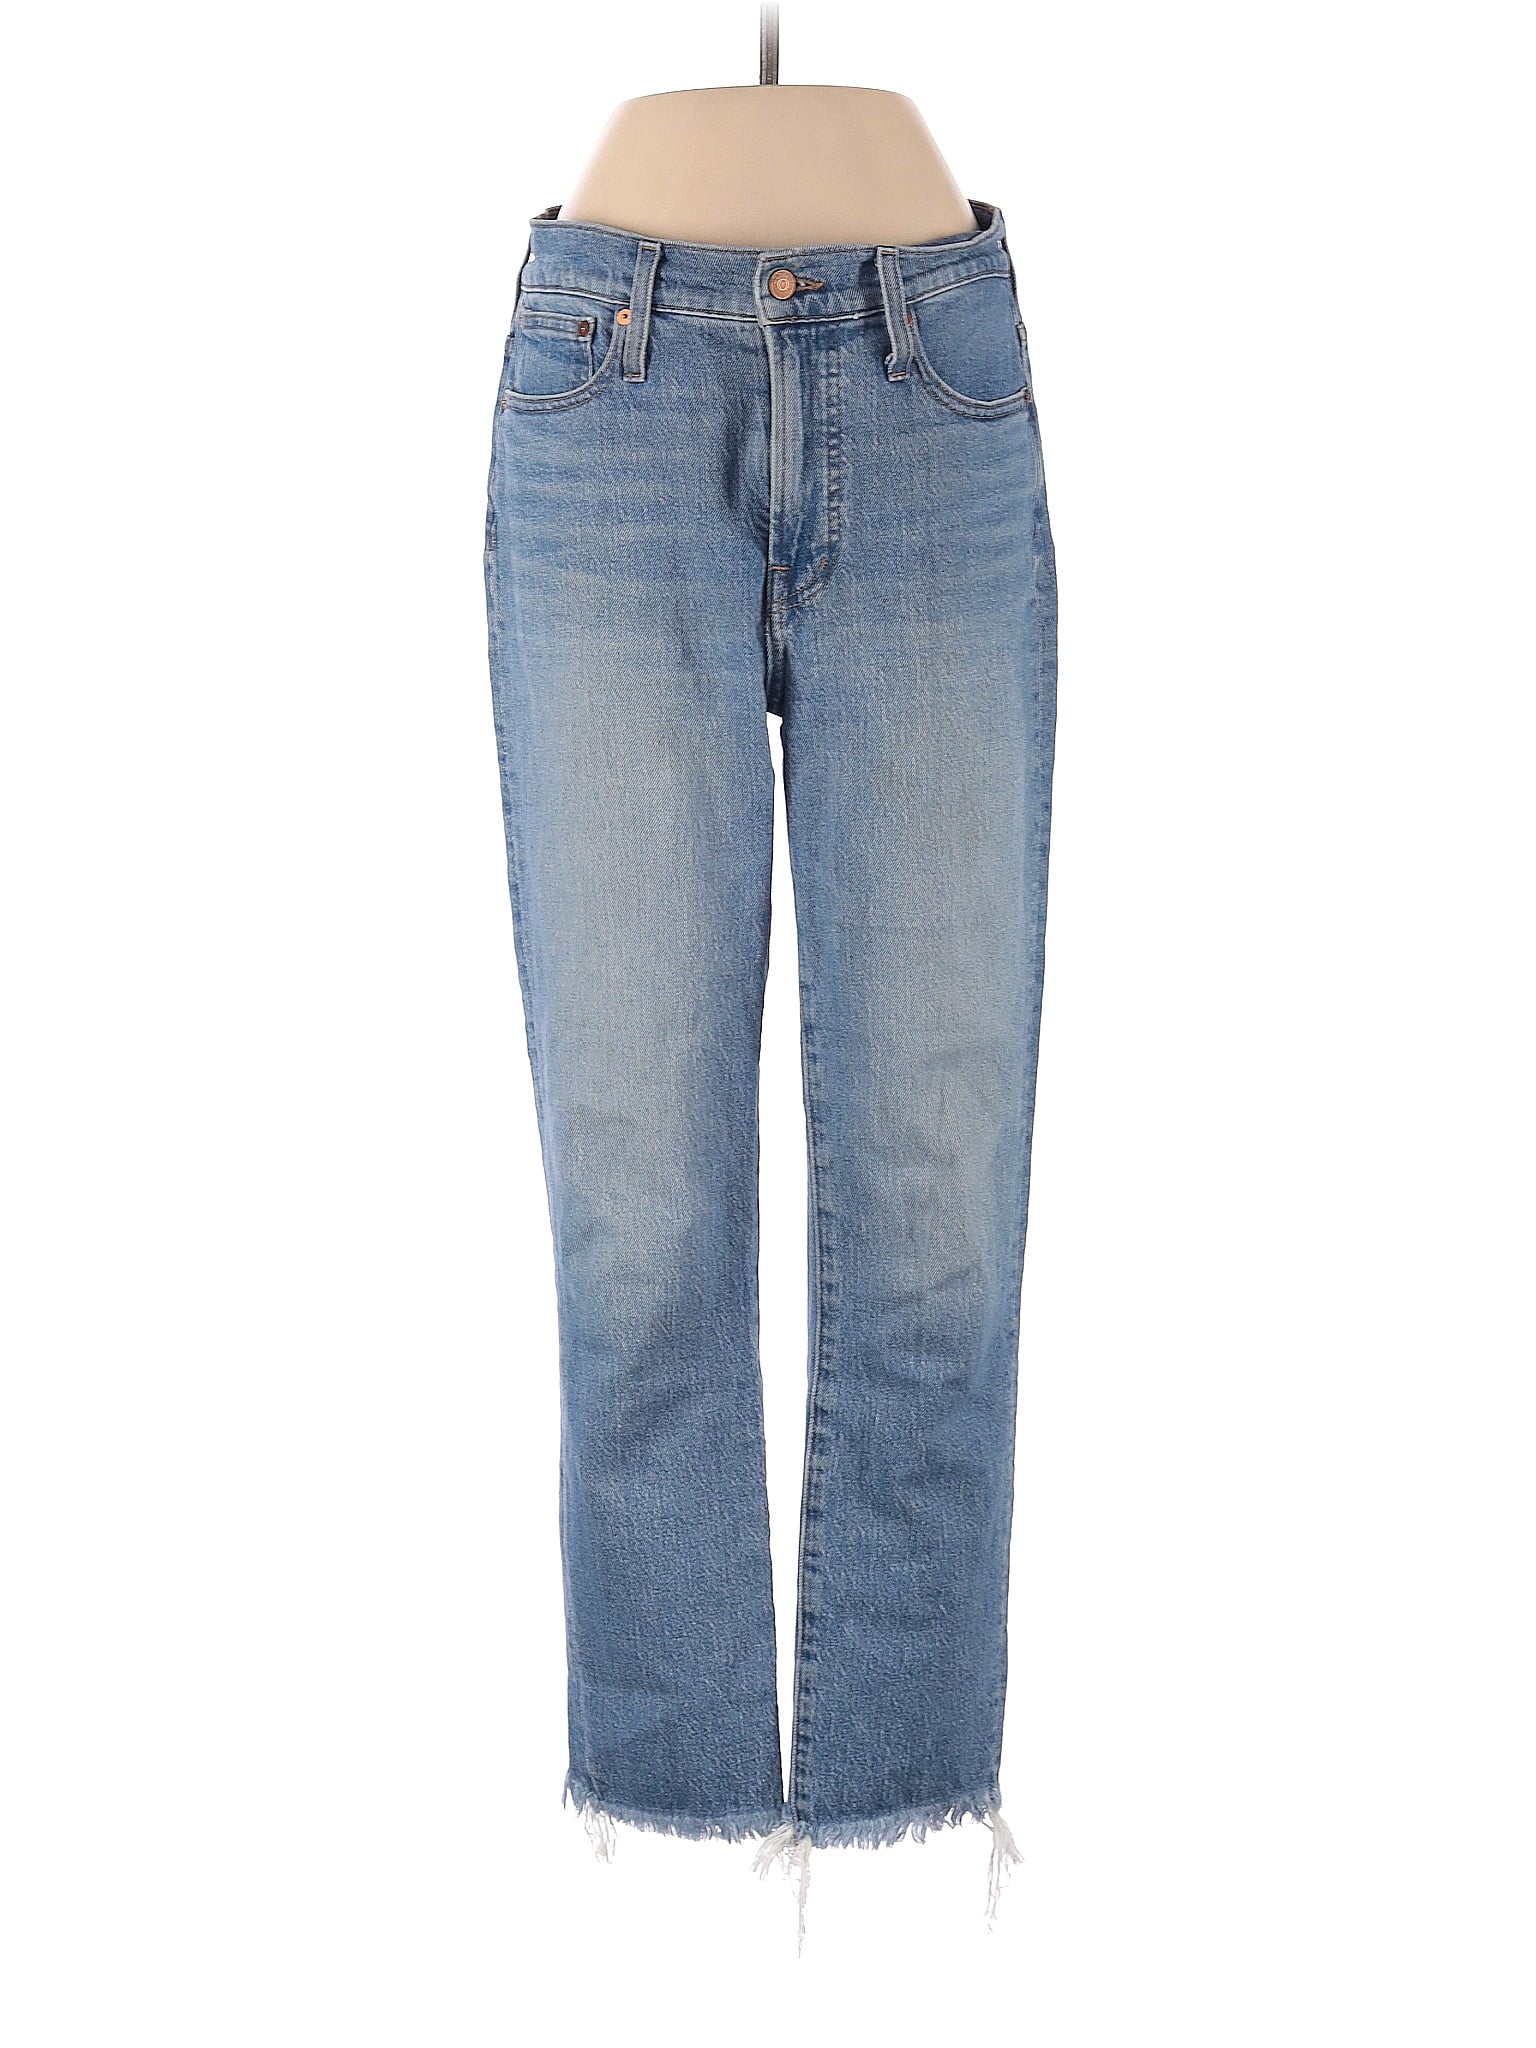 High-Rise Boyjeans Jeans in Medium Wash waist size - 26